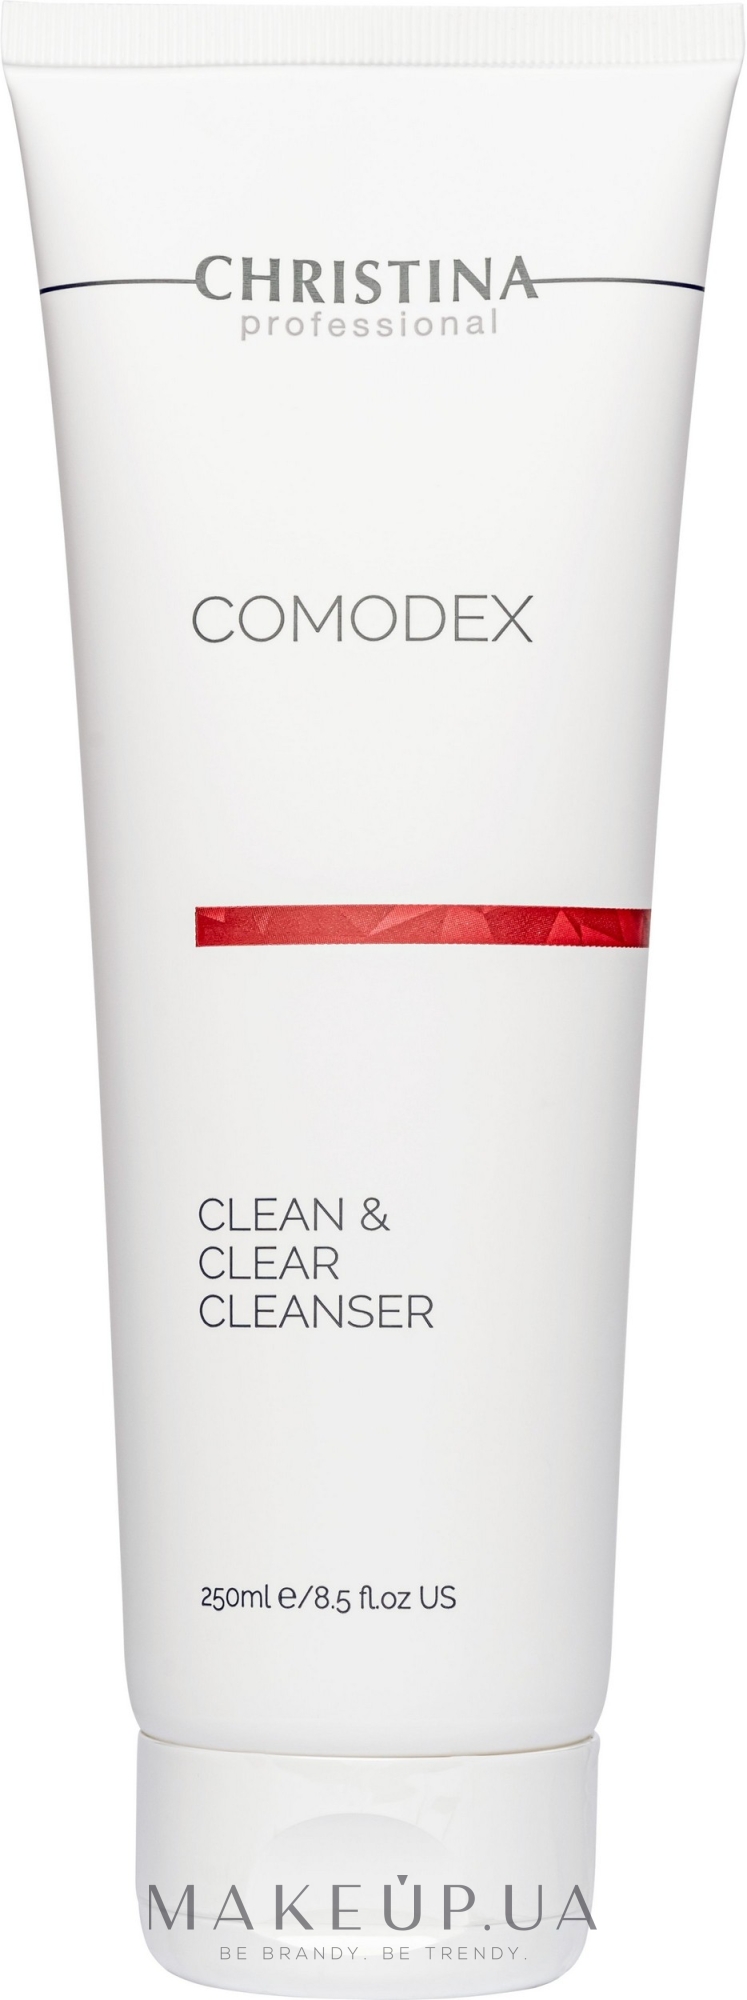 Очищающий гель для лица - Christina Comodex Clean&Clear Cleanser — фото 250ml